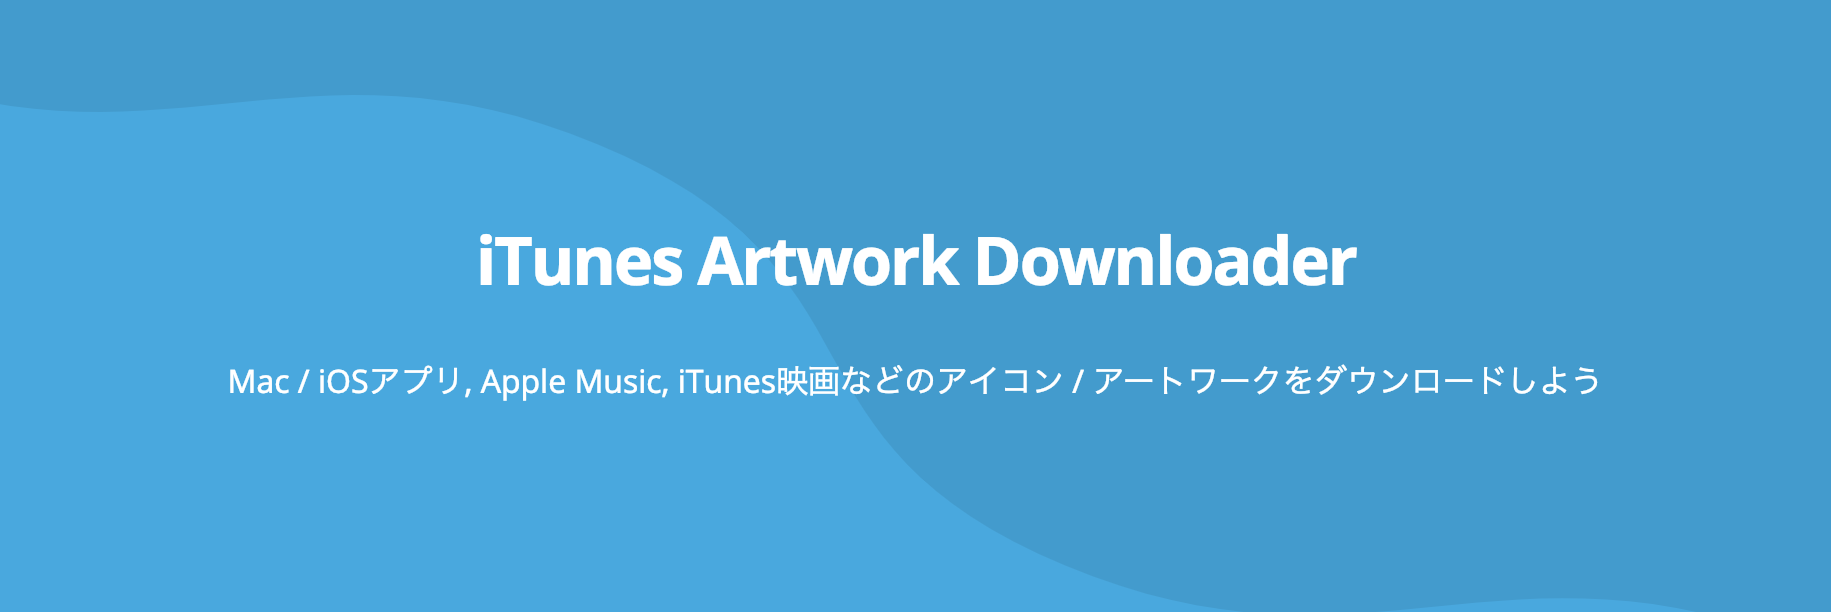 iTunes Artwork Downloader